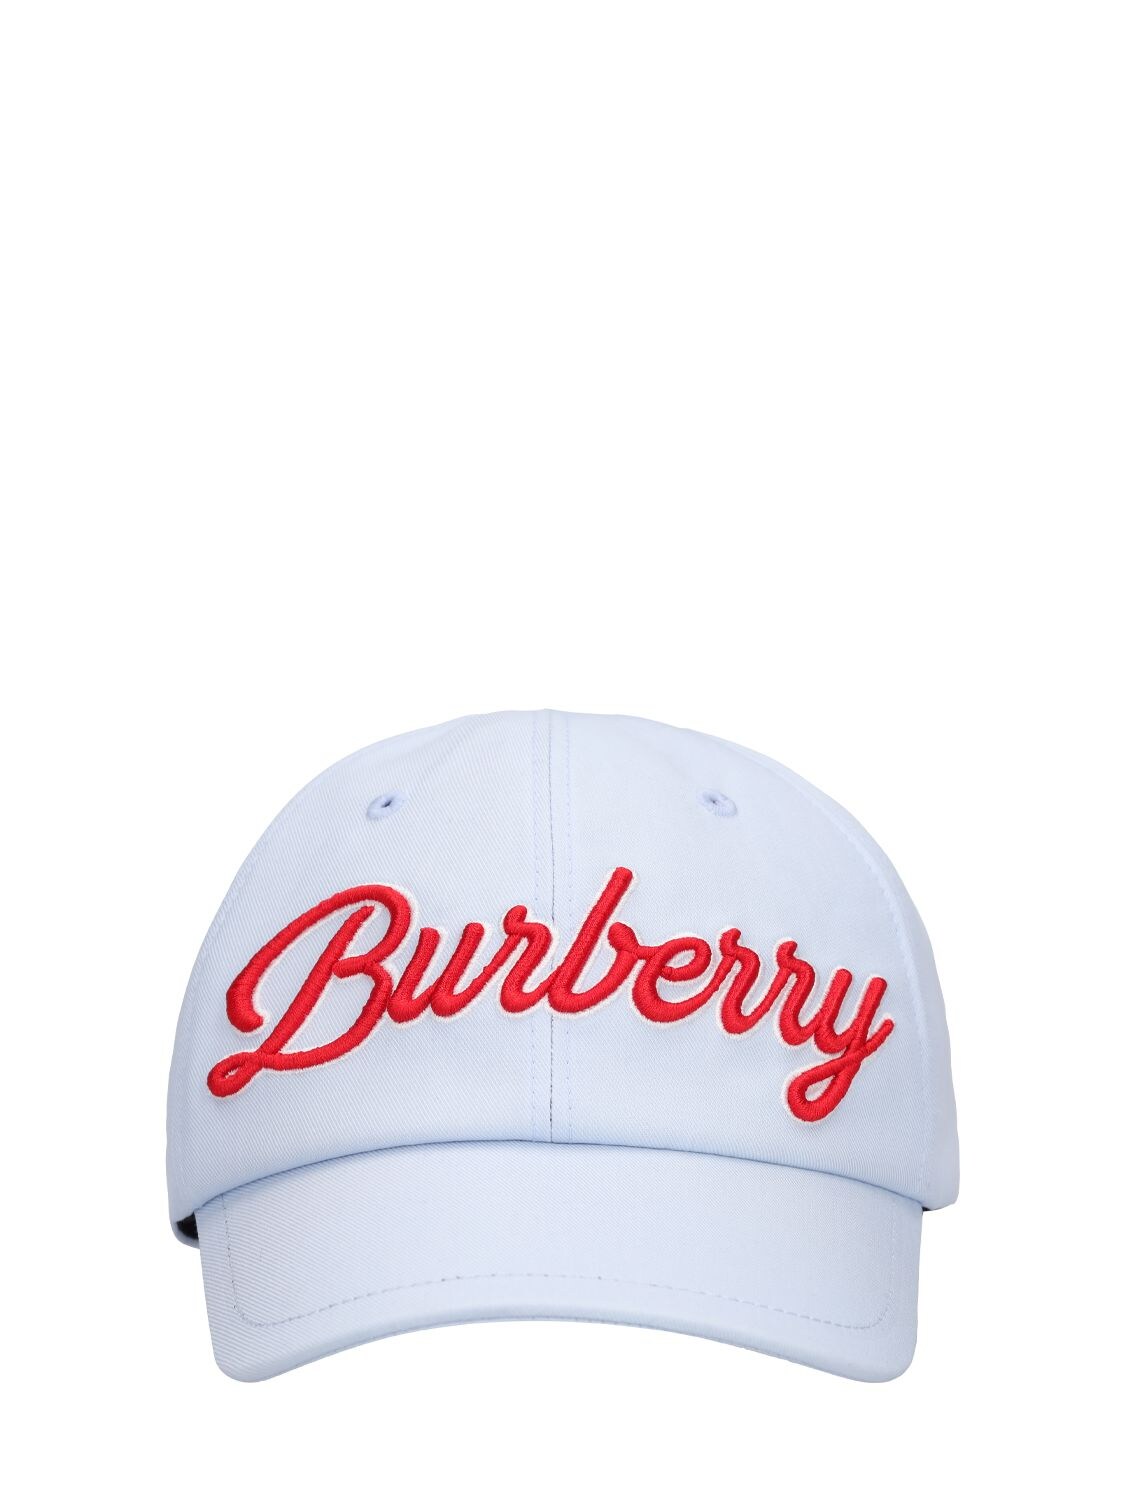 BURBERRY COTTON BASEBALL HAT W/ LOGO